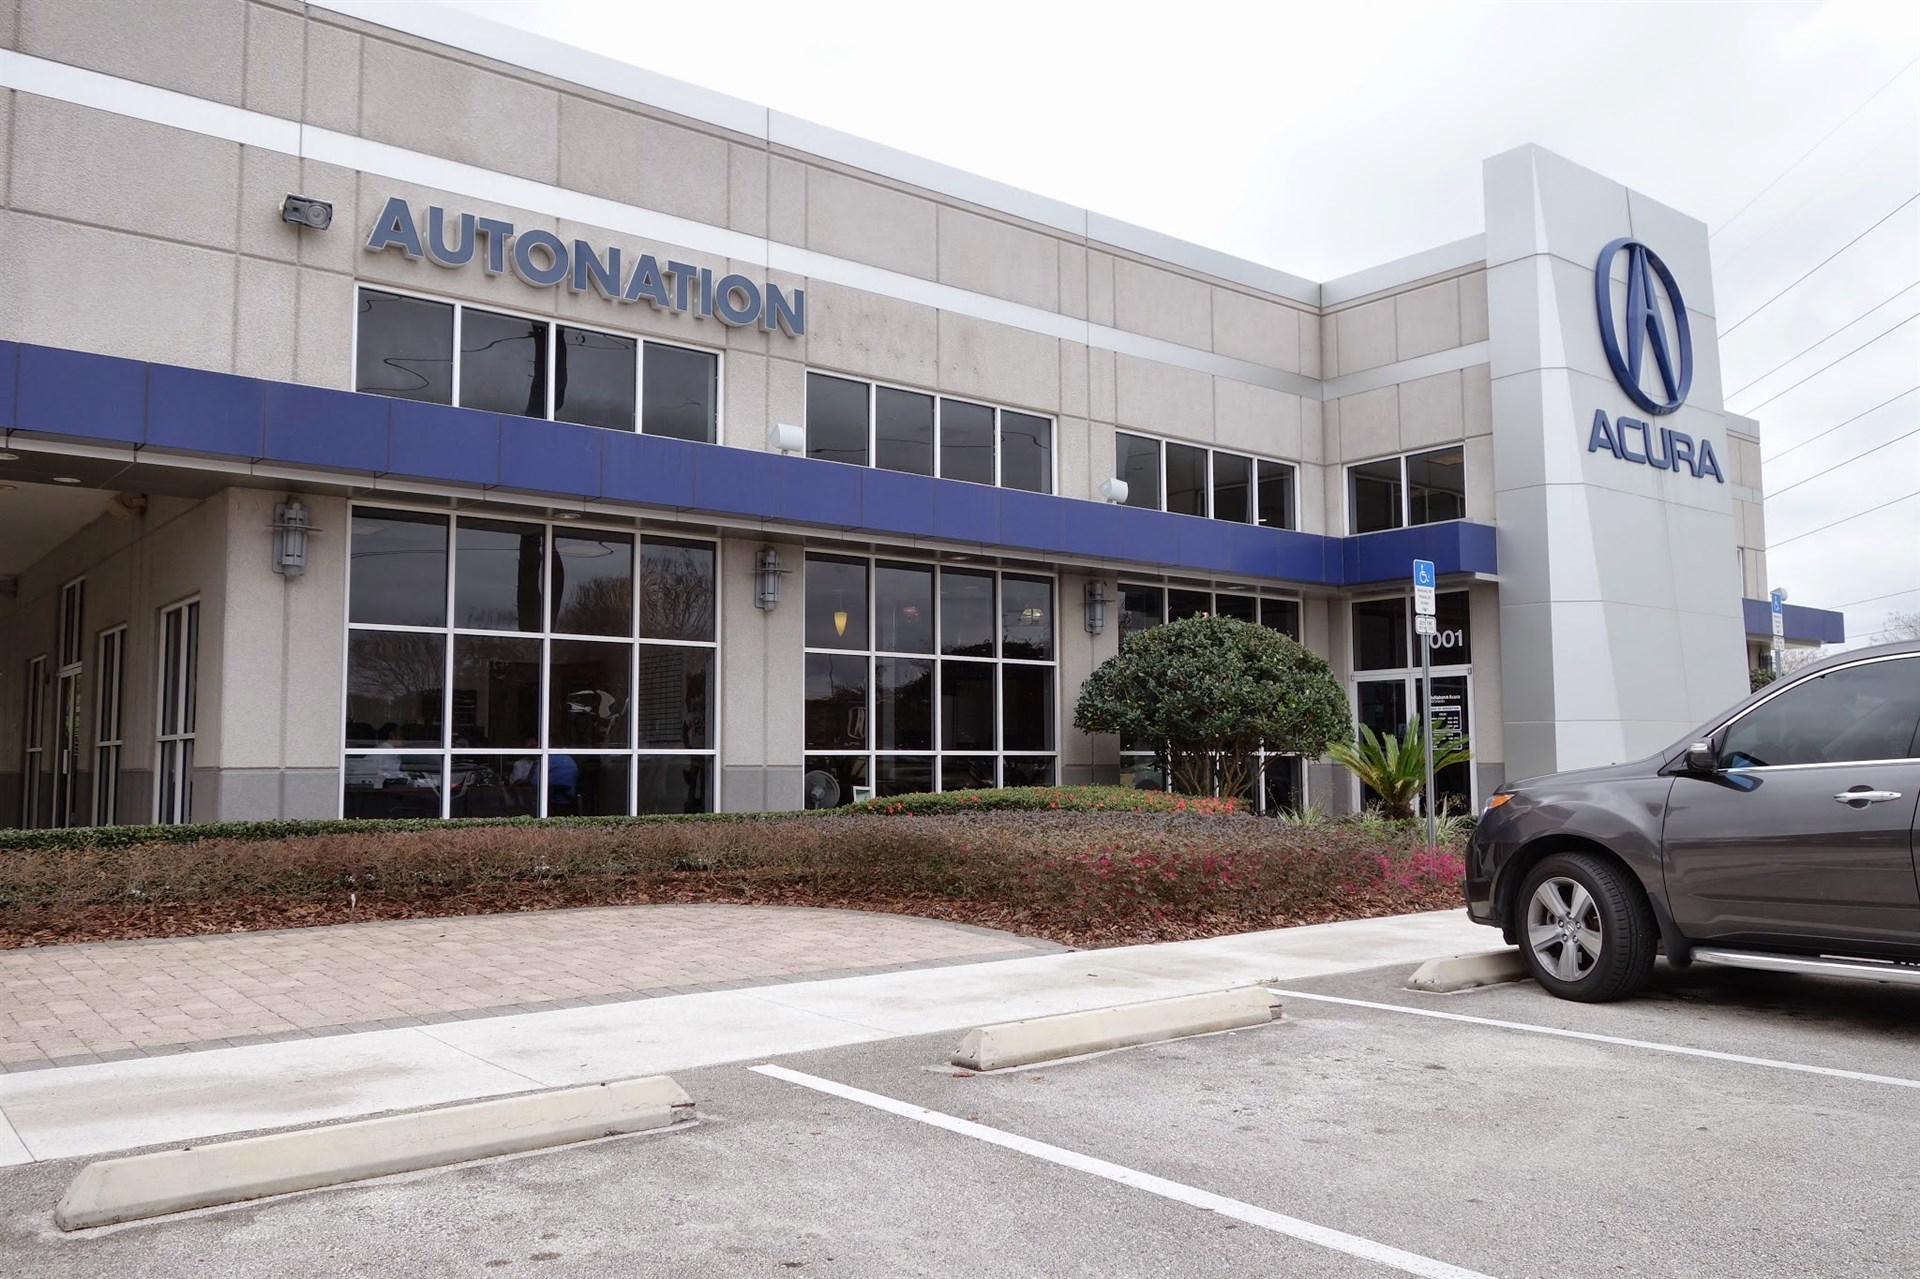 Autonation Acura North Orlando